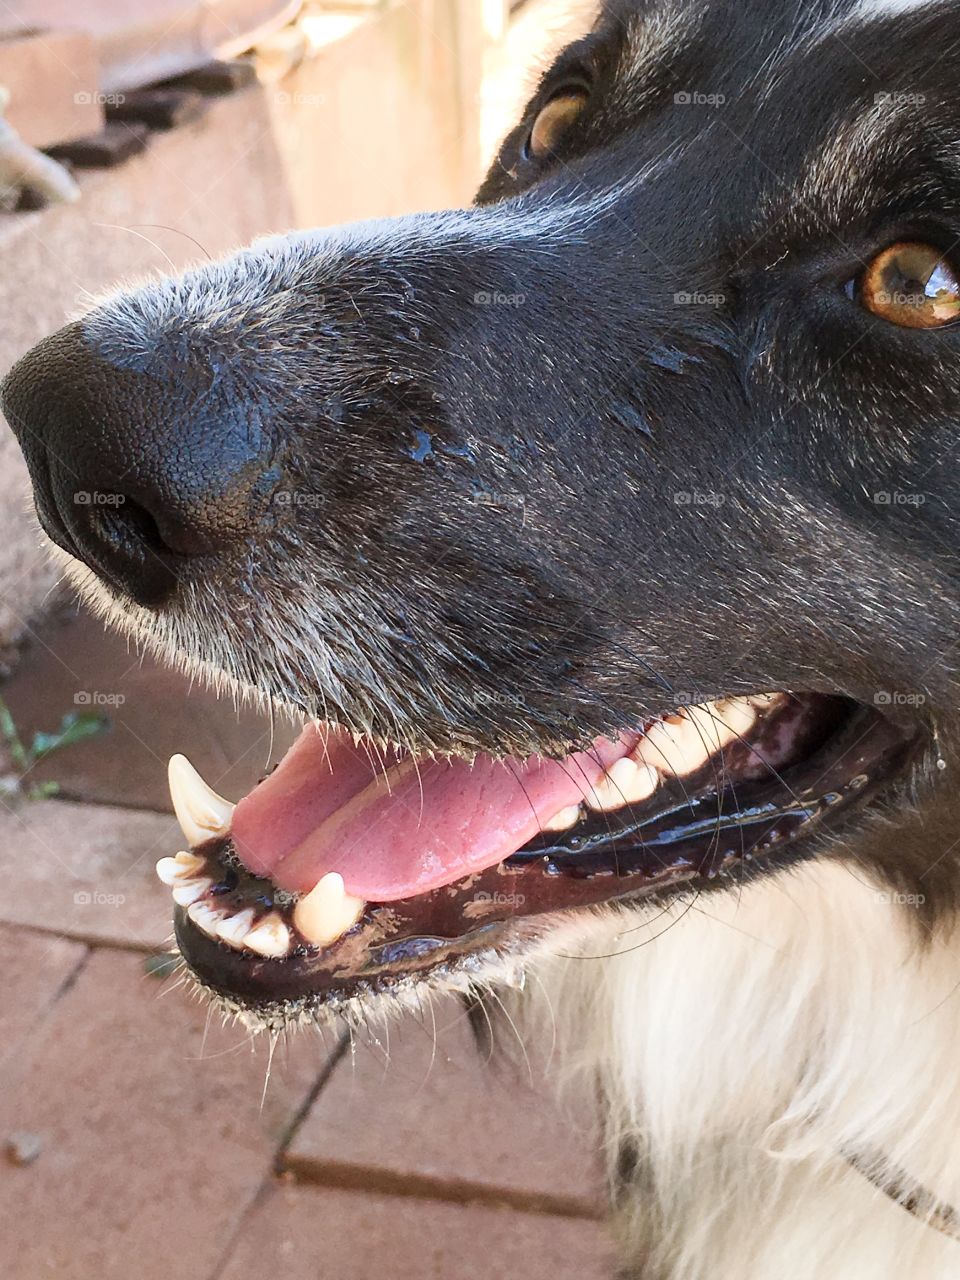 Dog smile, border collie sheepdog closeup headshot smiling happy content